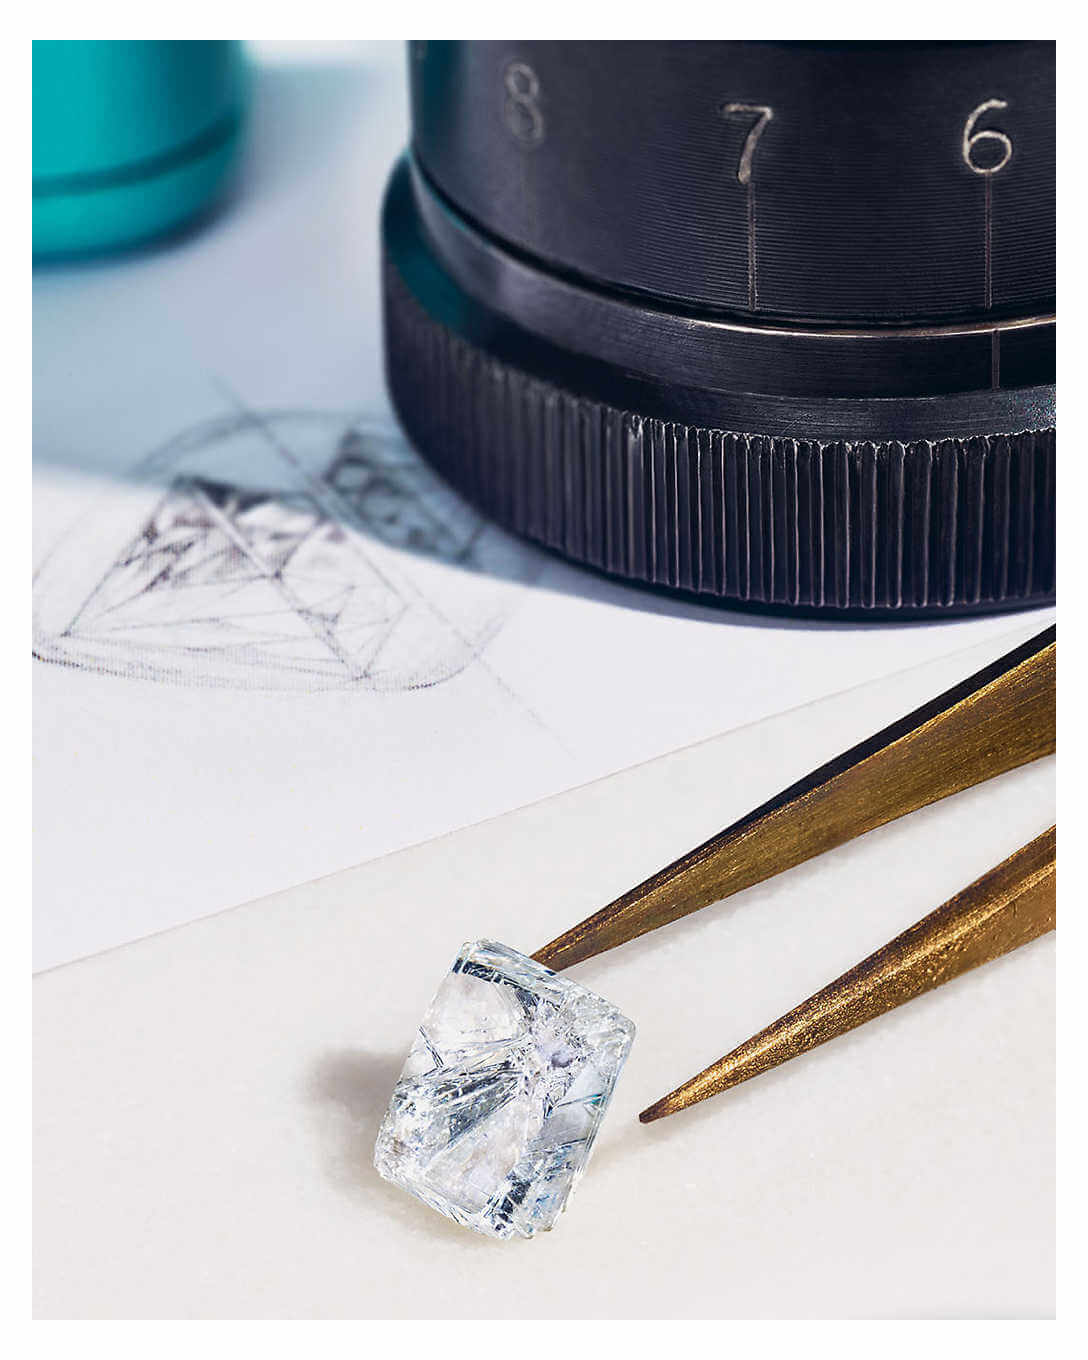 Diamond Quality Guide: How To Buy The 4 C's Diamonds. – Noray Designs